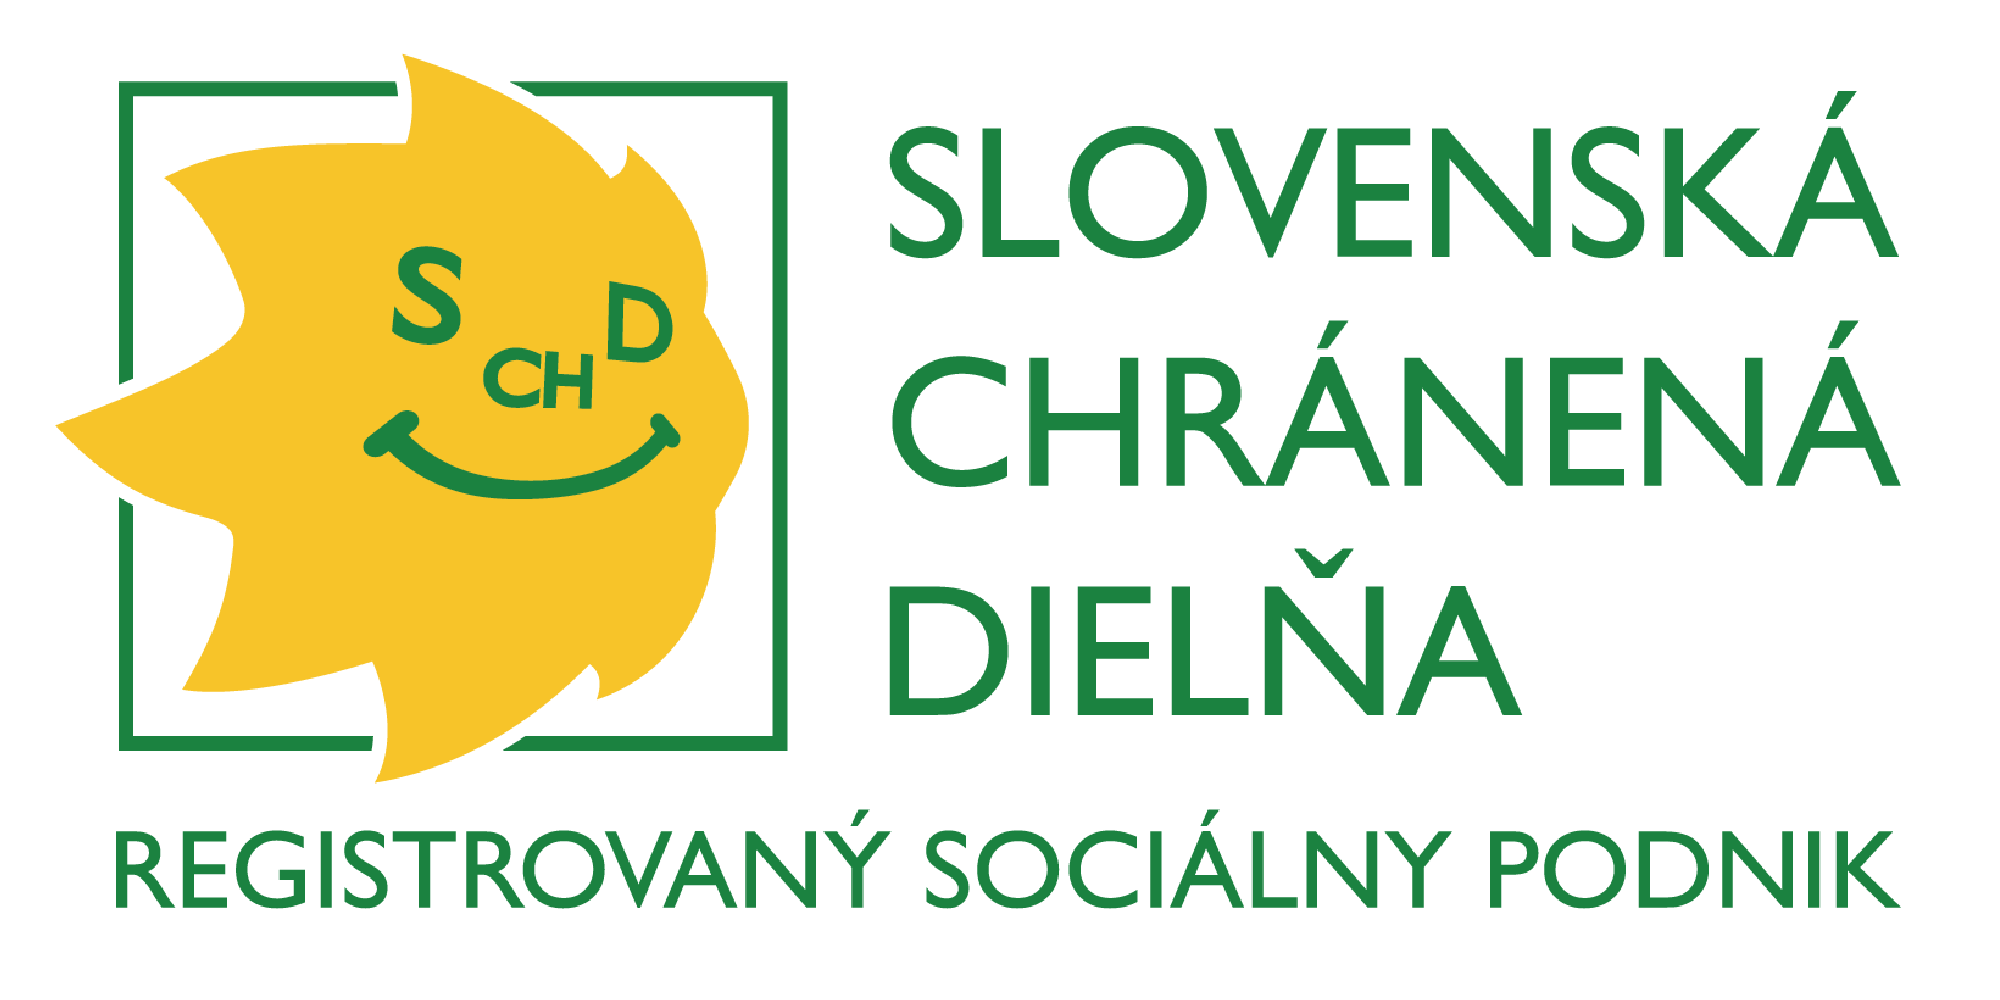 SLOVENSKÁ CHRÁNENÁ DIELŇA Logo